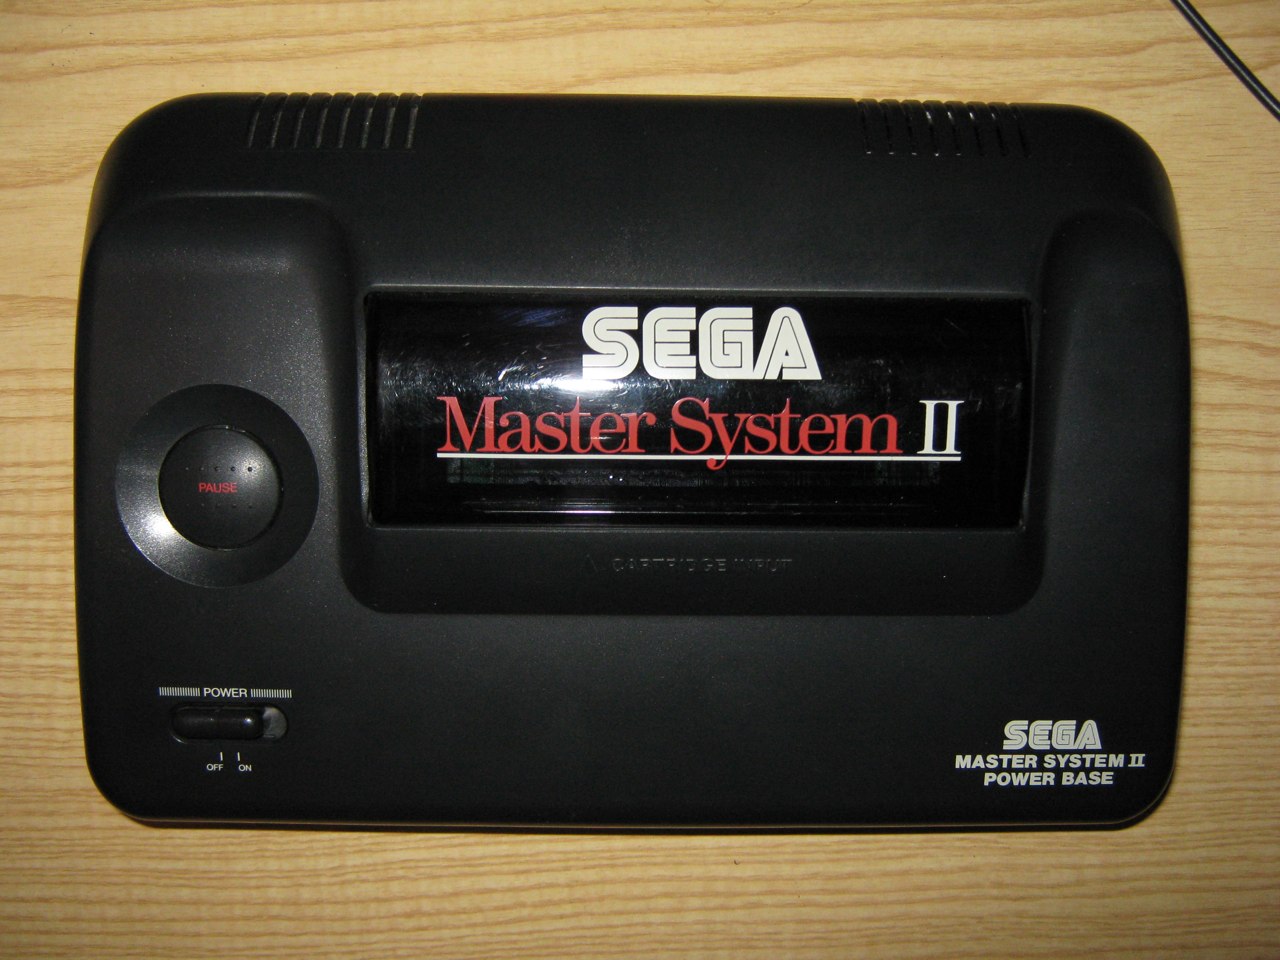 sega master system 2 review